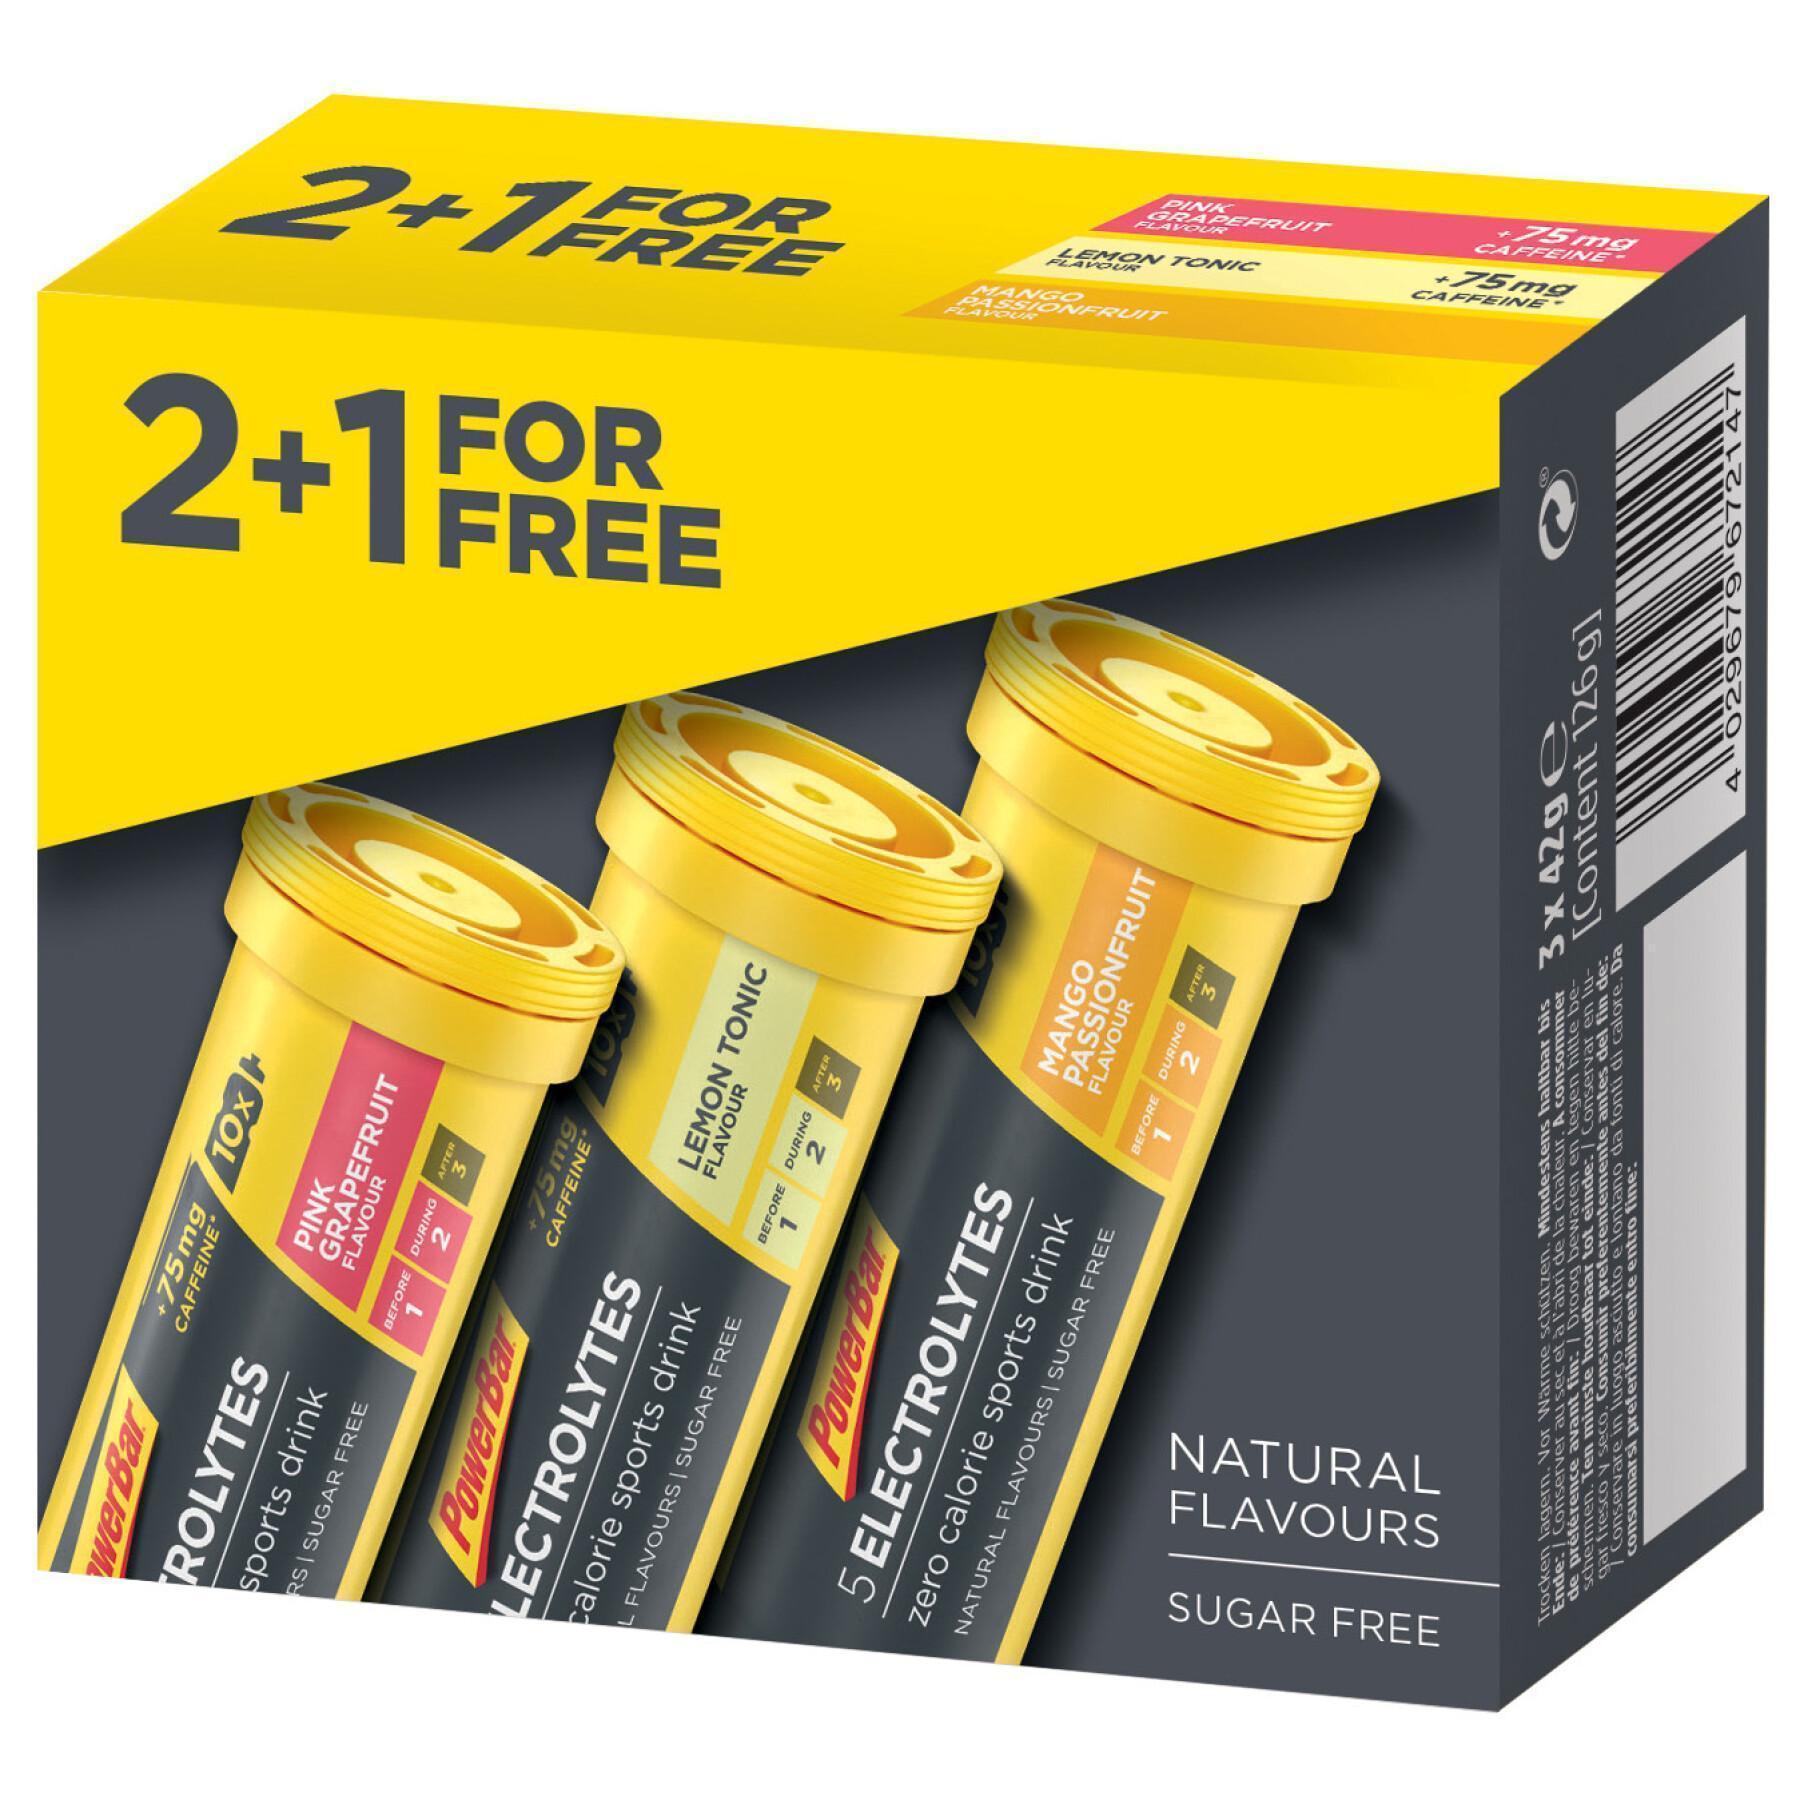 Boissons PowerBar 5 Electrolytes MultiPack 8 packs of 2+1x10 tabs Mixed : Mango-Passion Fruit+Pink Grapefruit+Lemon Tonic